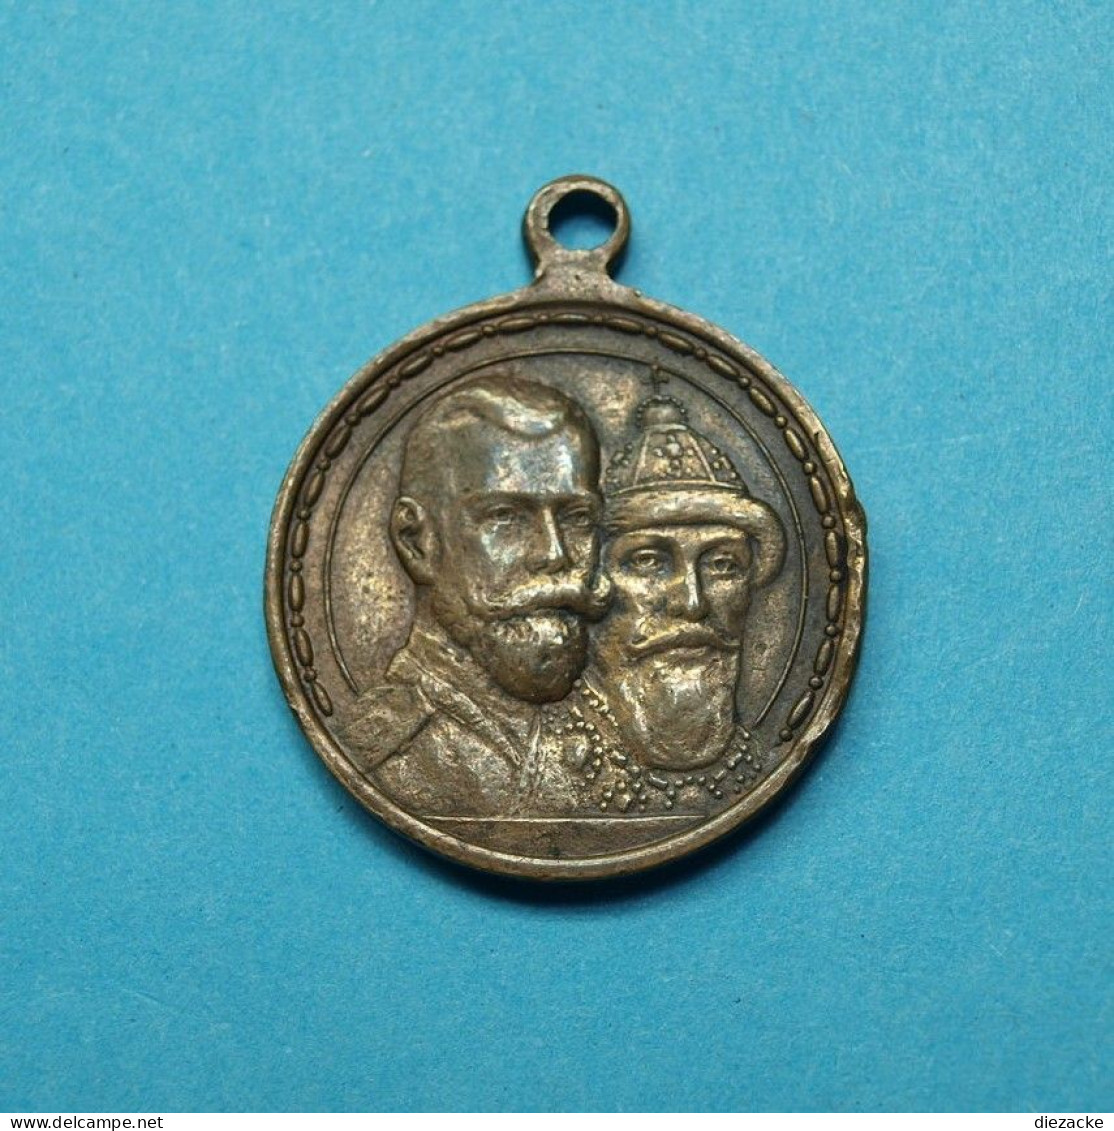 Russland 1913 Medaille Zar Nikolaj II. Und Michail I. (MZ1014 - Non Classés